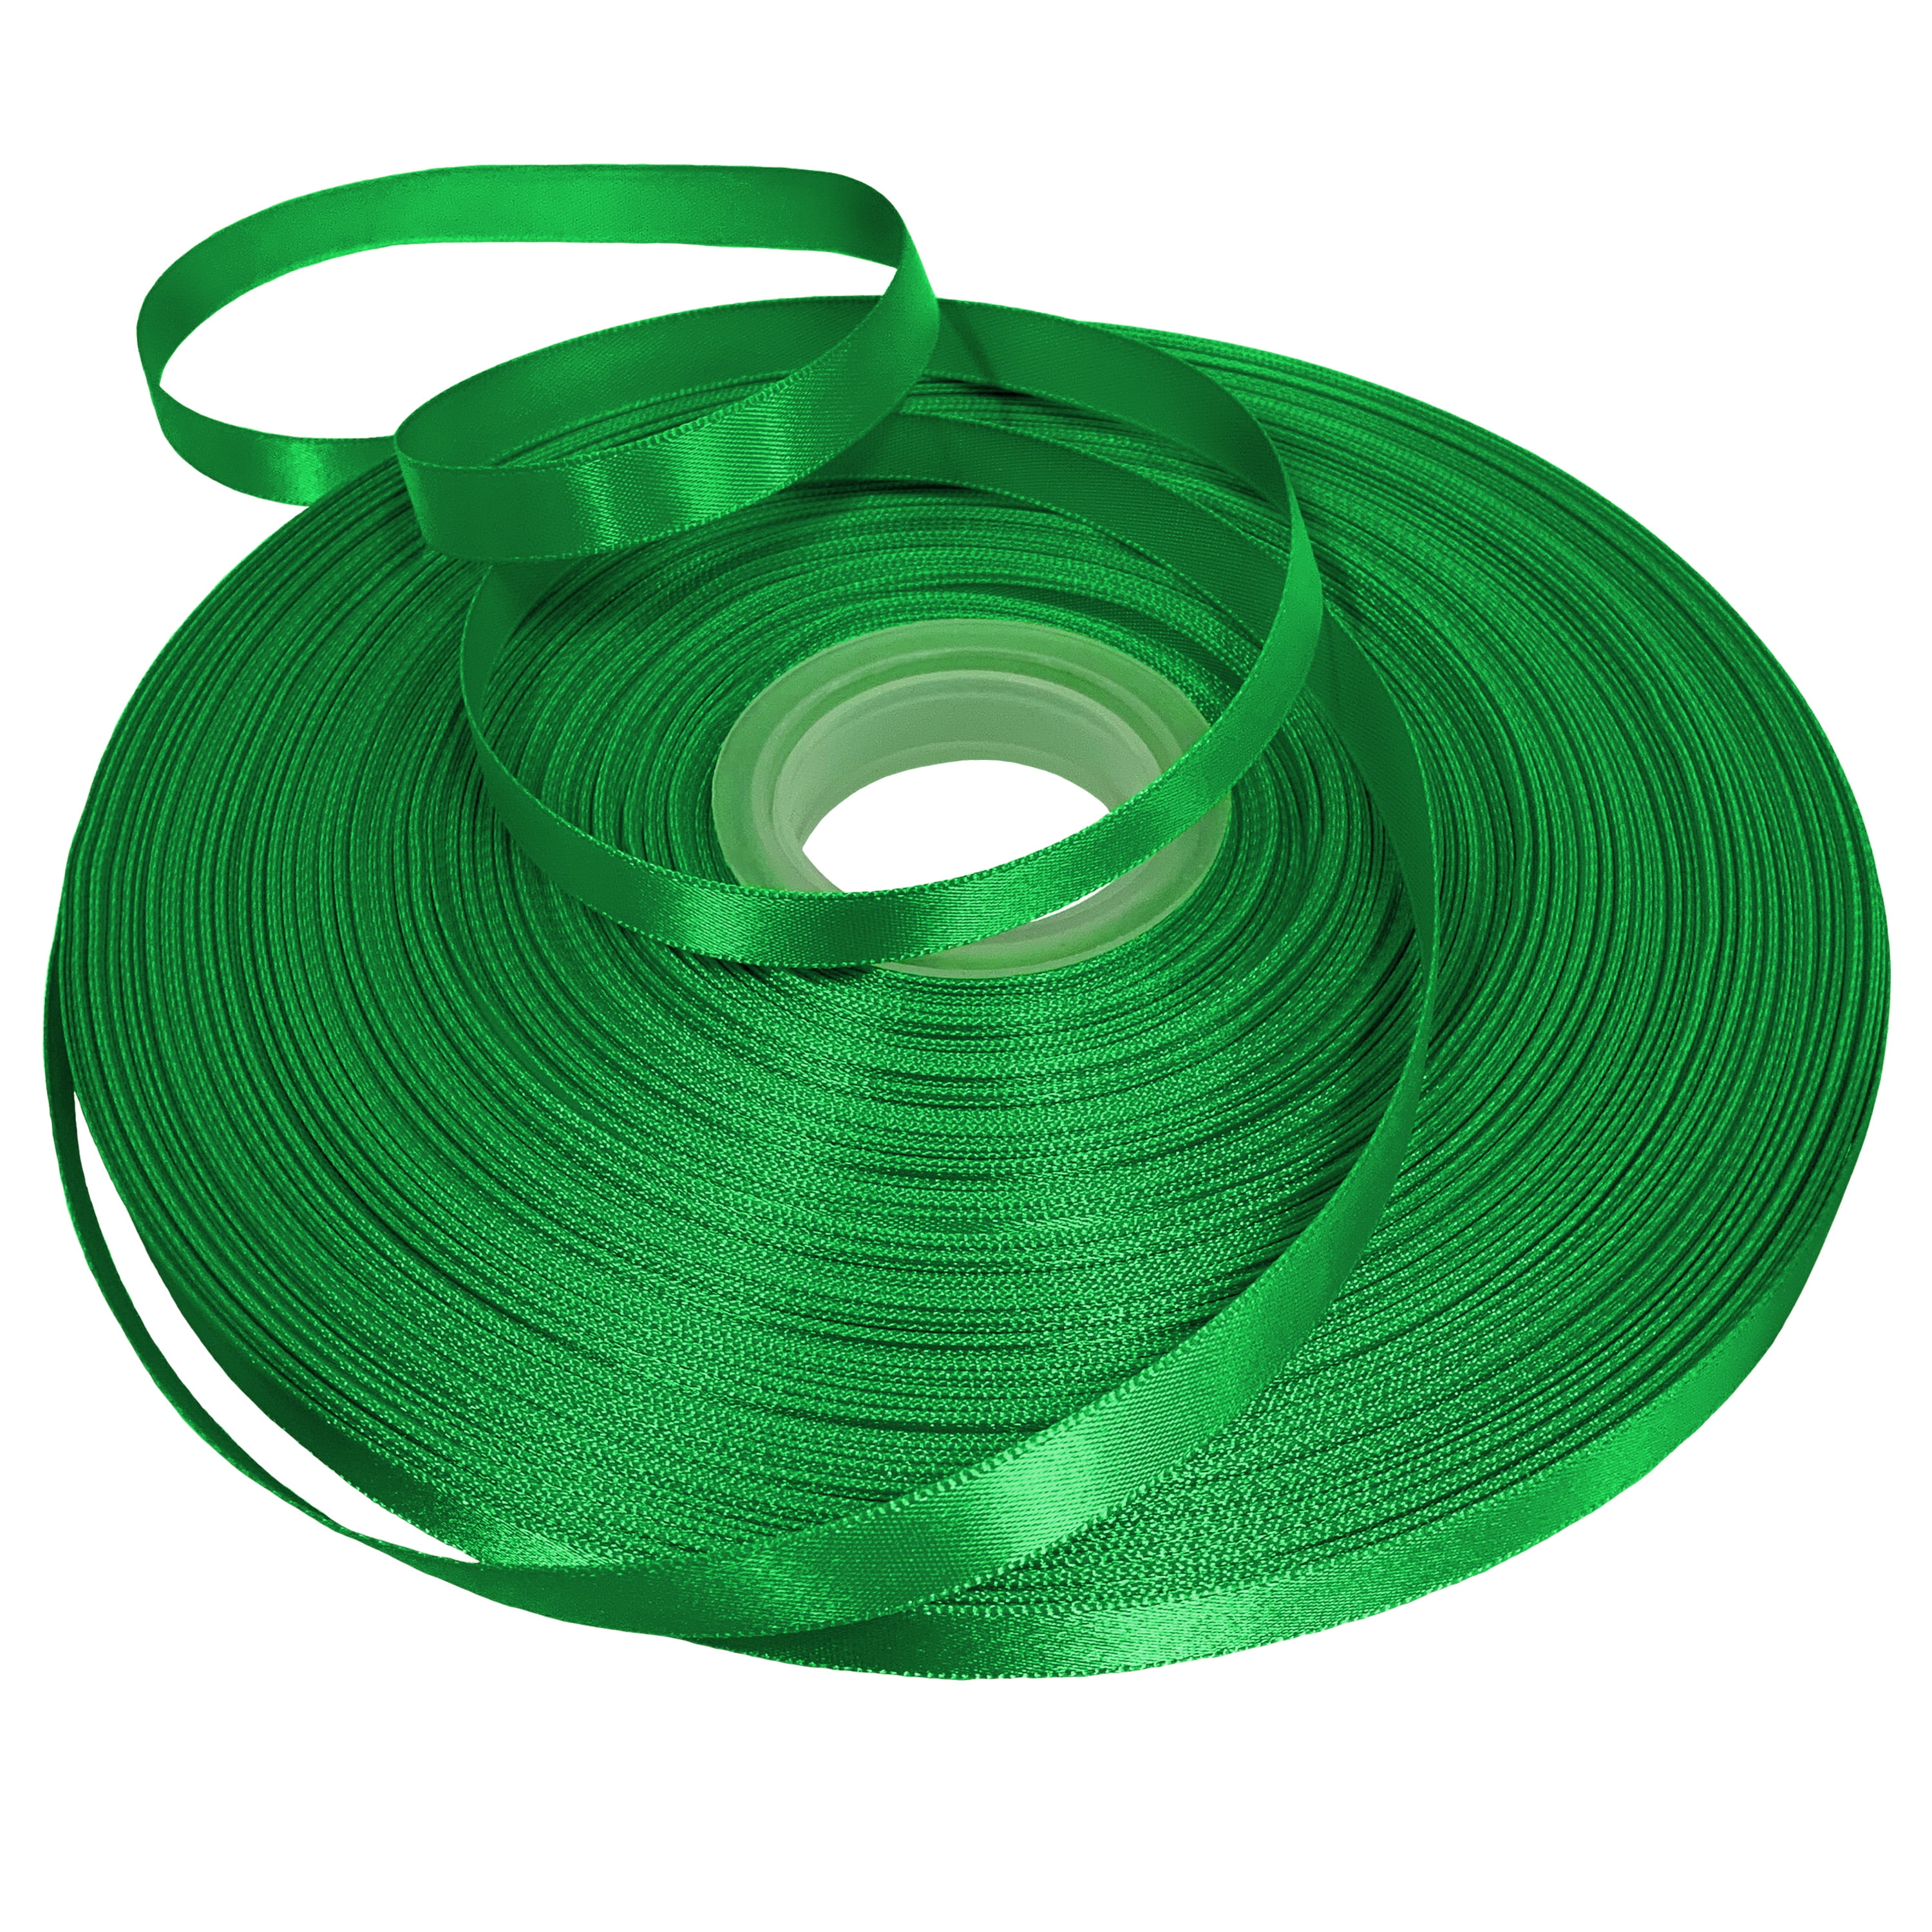 Emerald Green Double Faced Satin Ribbon, 7/8x100 Yards